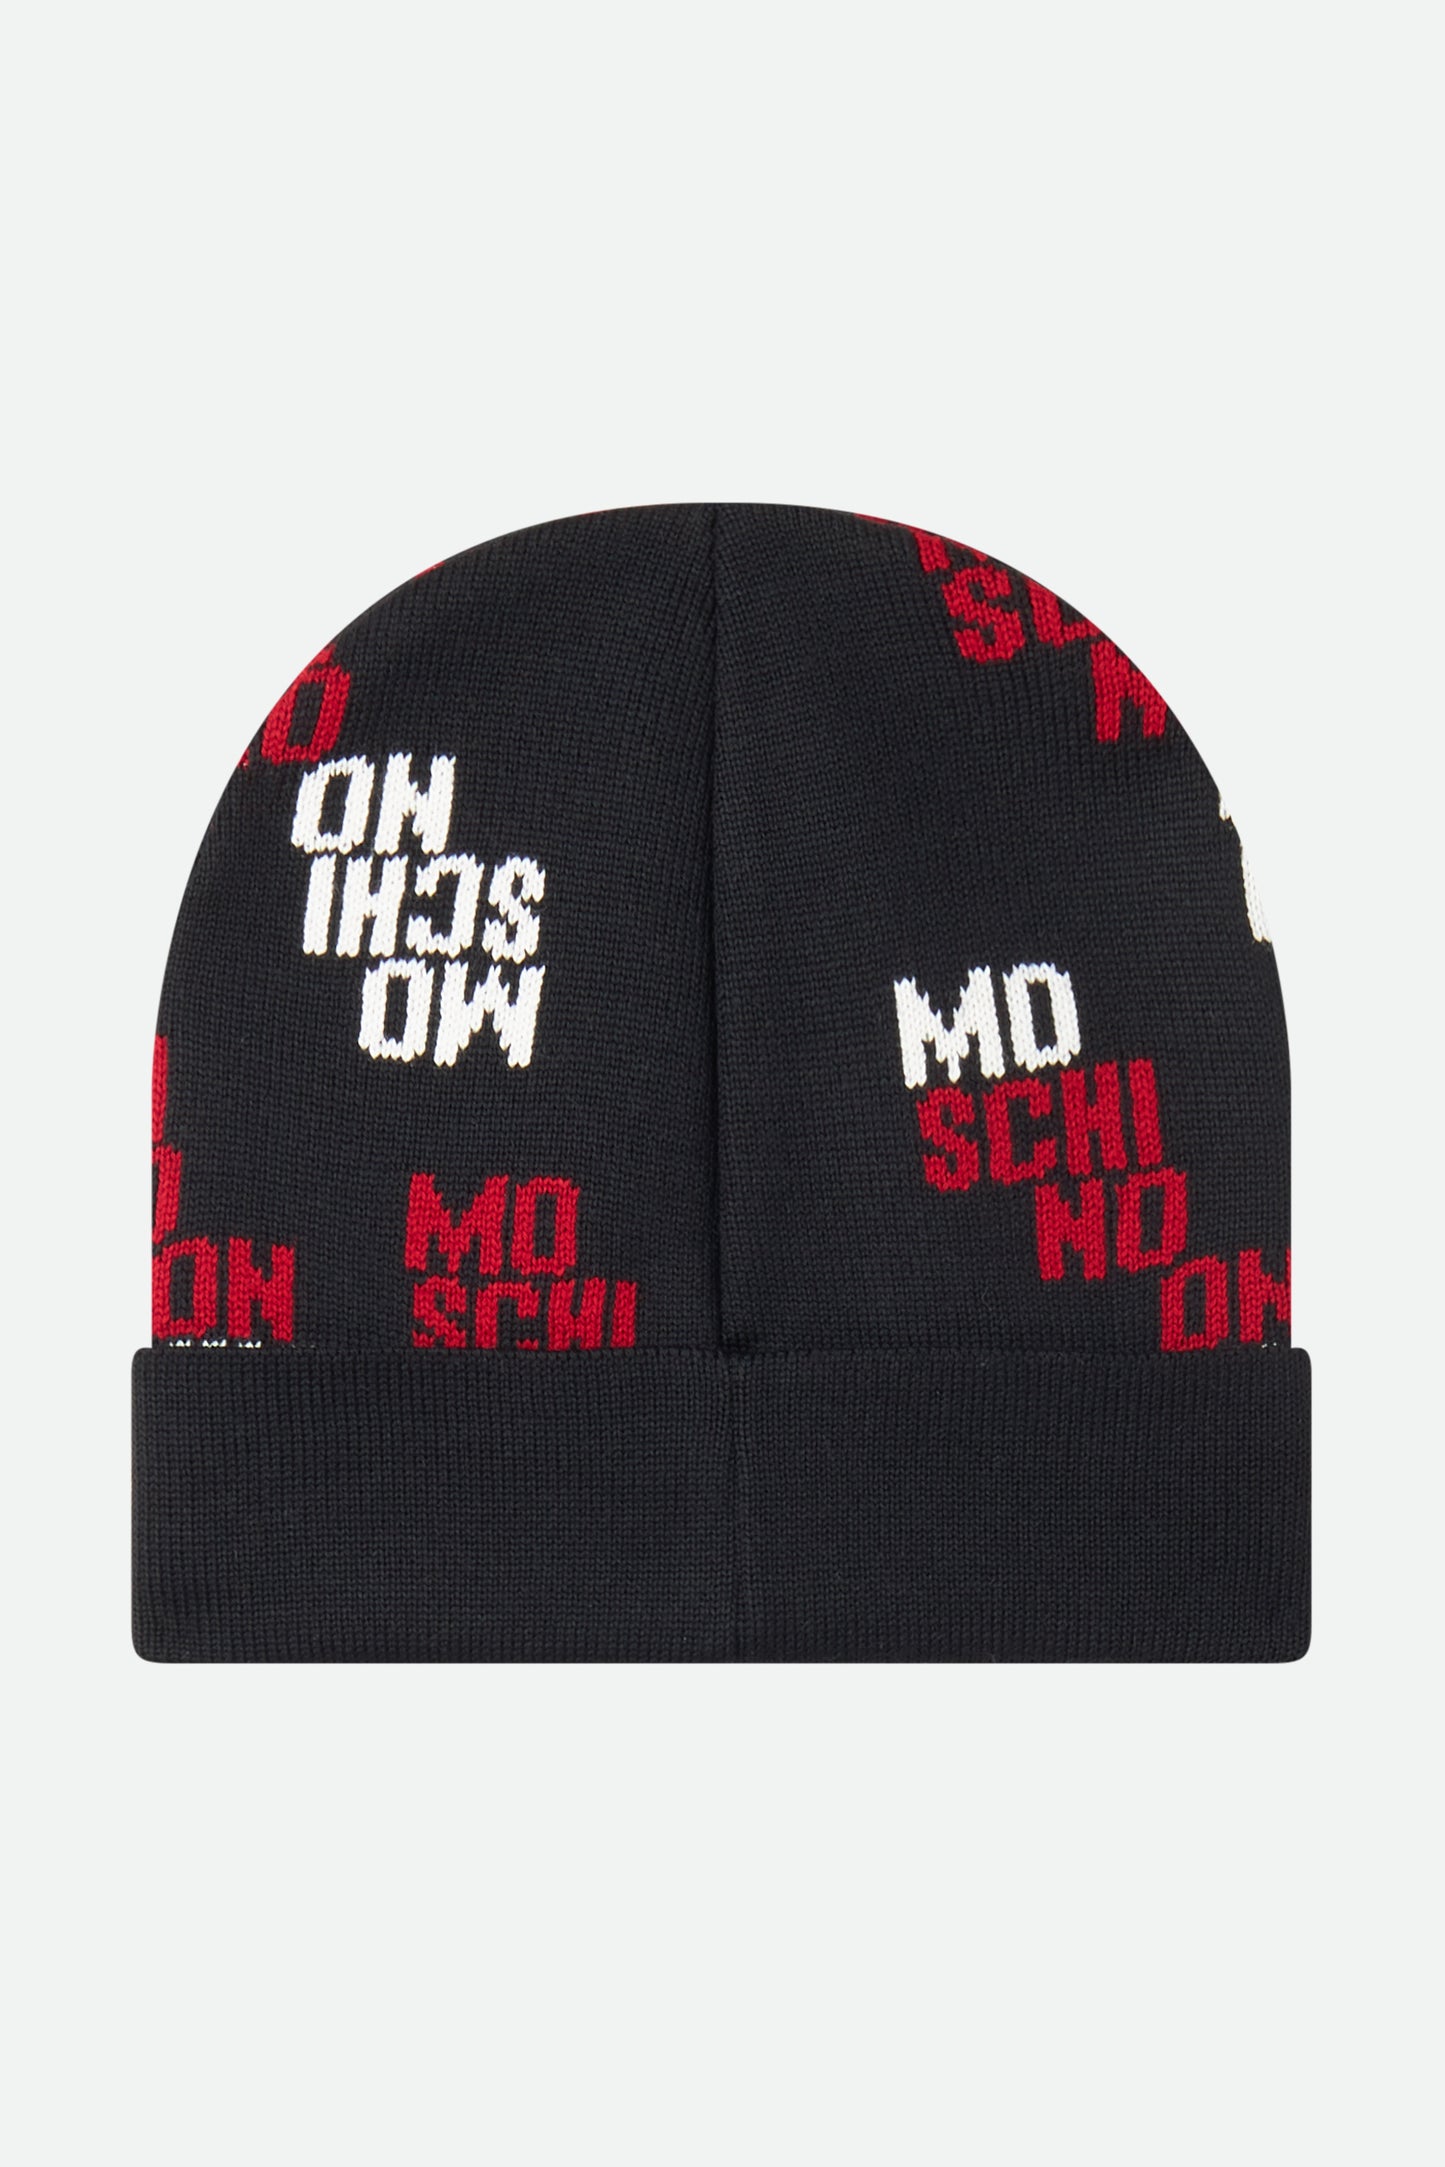 Moschino Logoed Black Hat